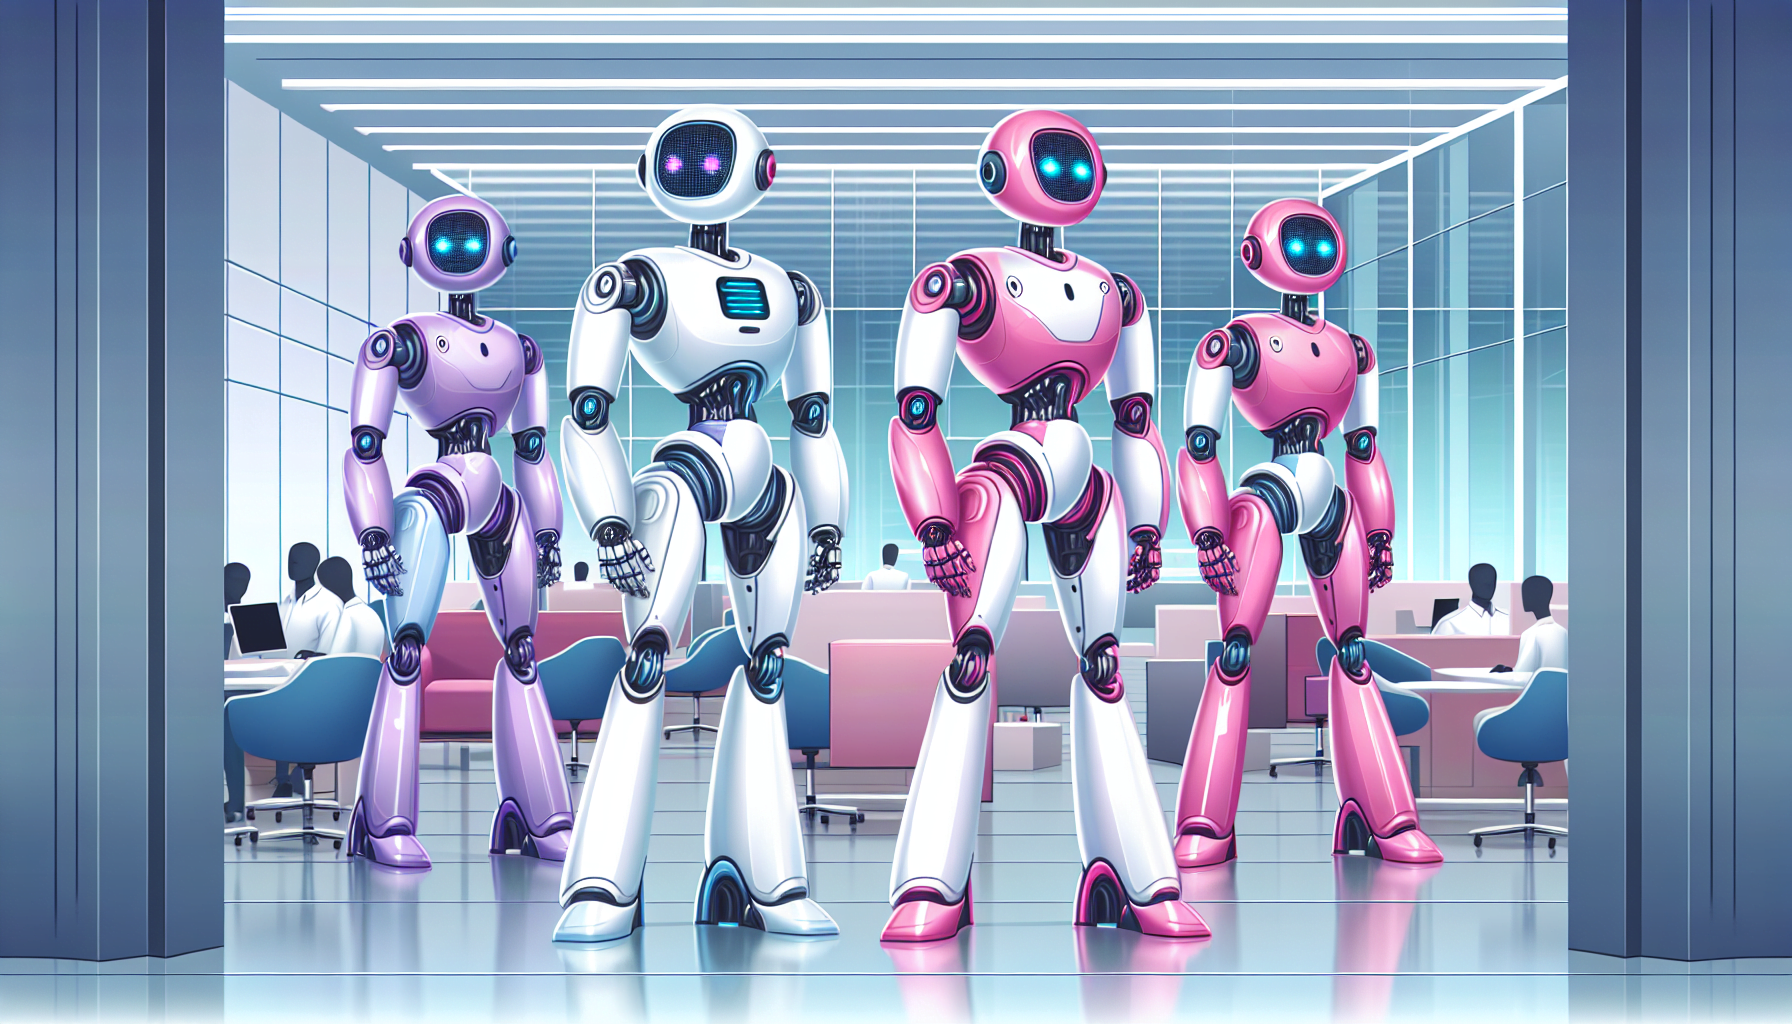 robots futuristes dessin anime couleurs rose violet blanc technologie avancee intelligence artificielle environnement entreprise moderne.jpg